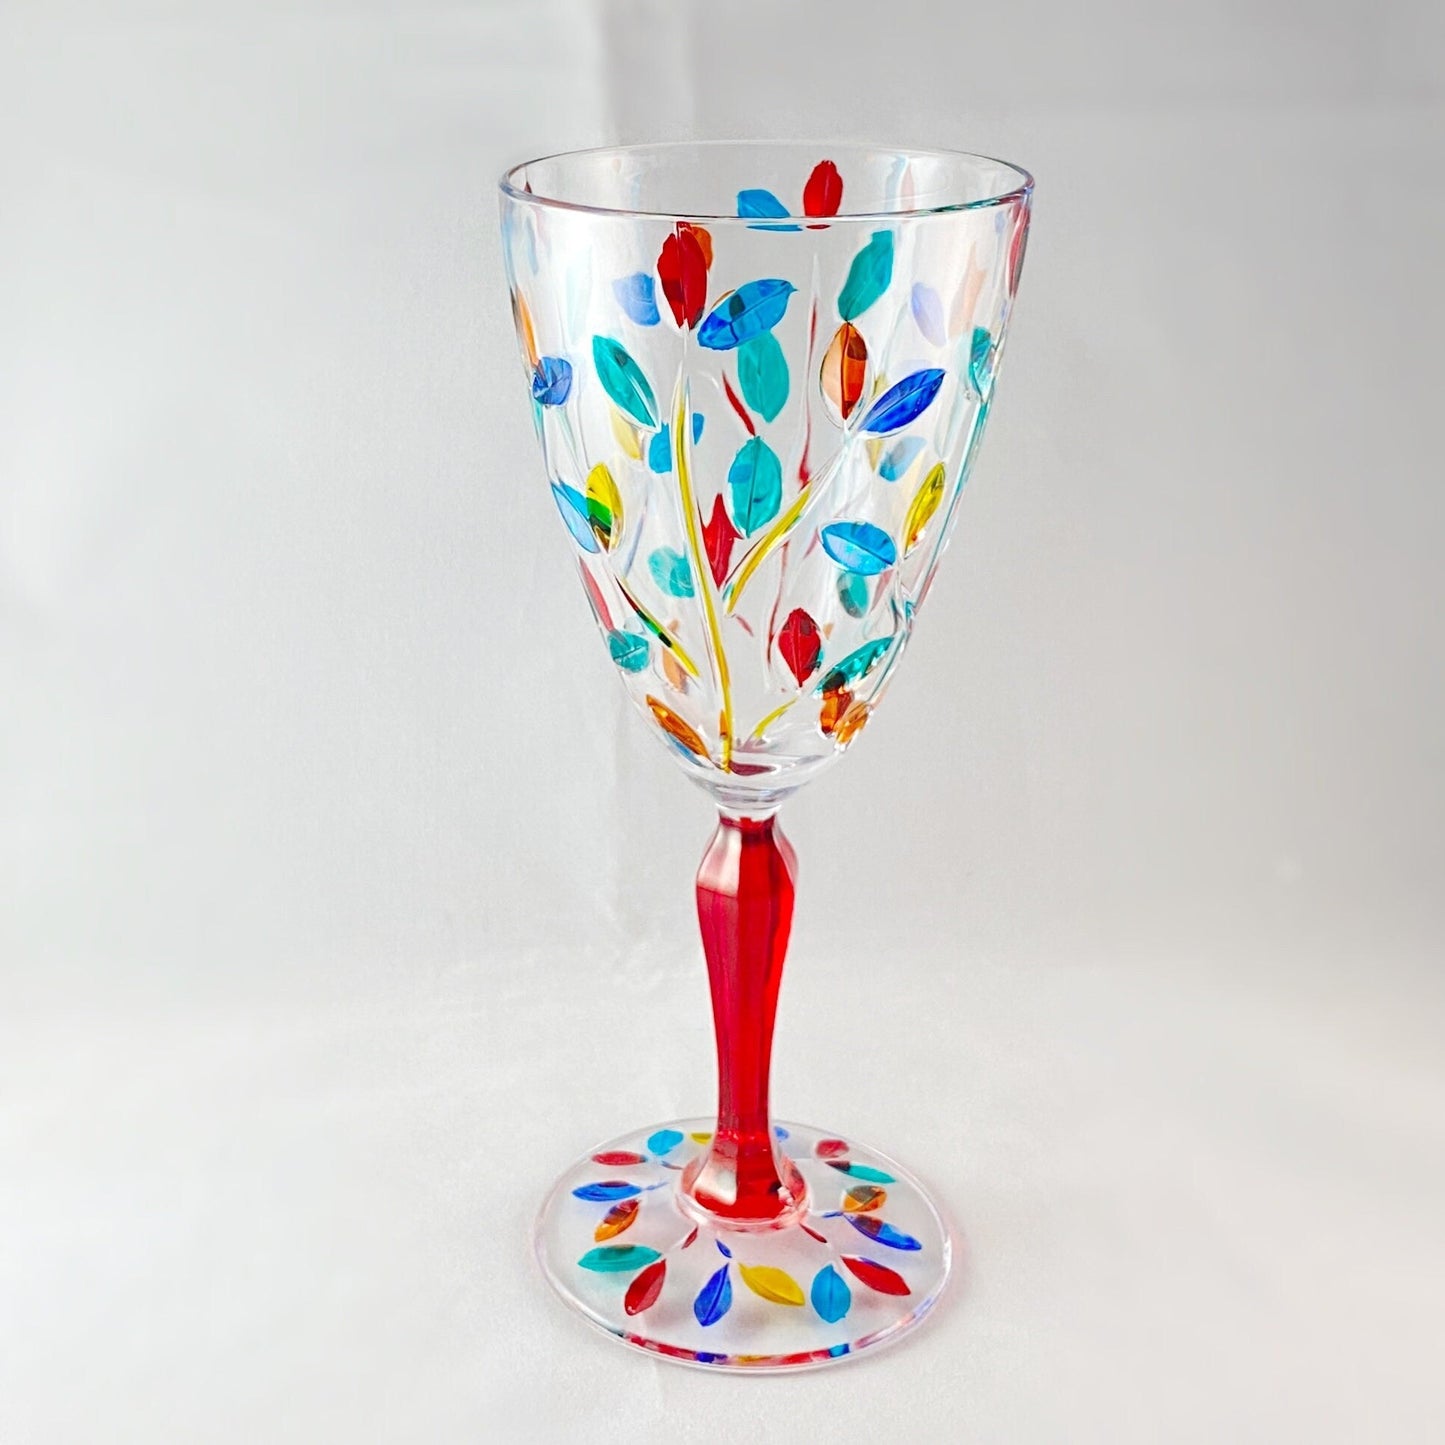 Red Stem Tree of Life Venetian Glass Wine Glass - Handmade in Italy, Colorful Murano Glass